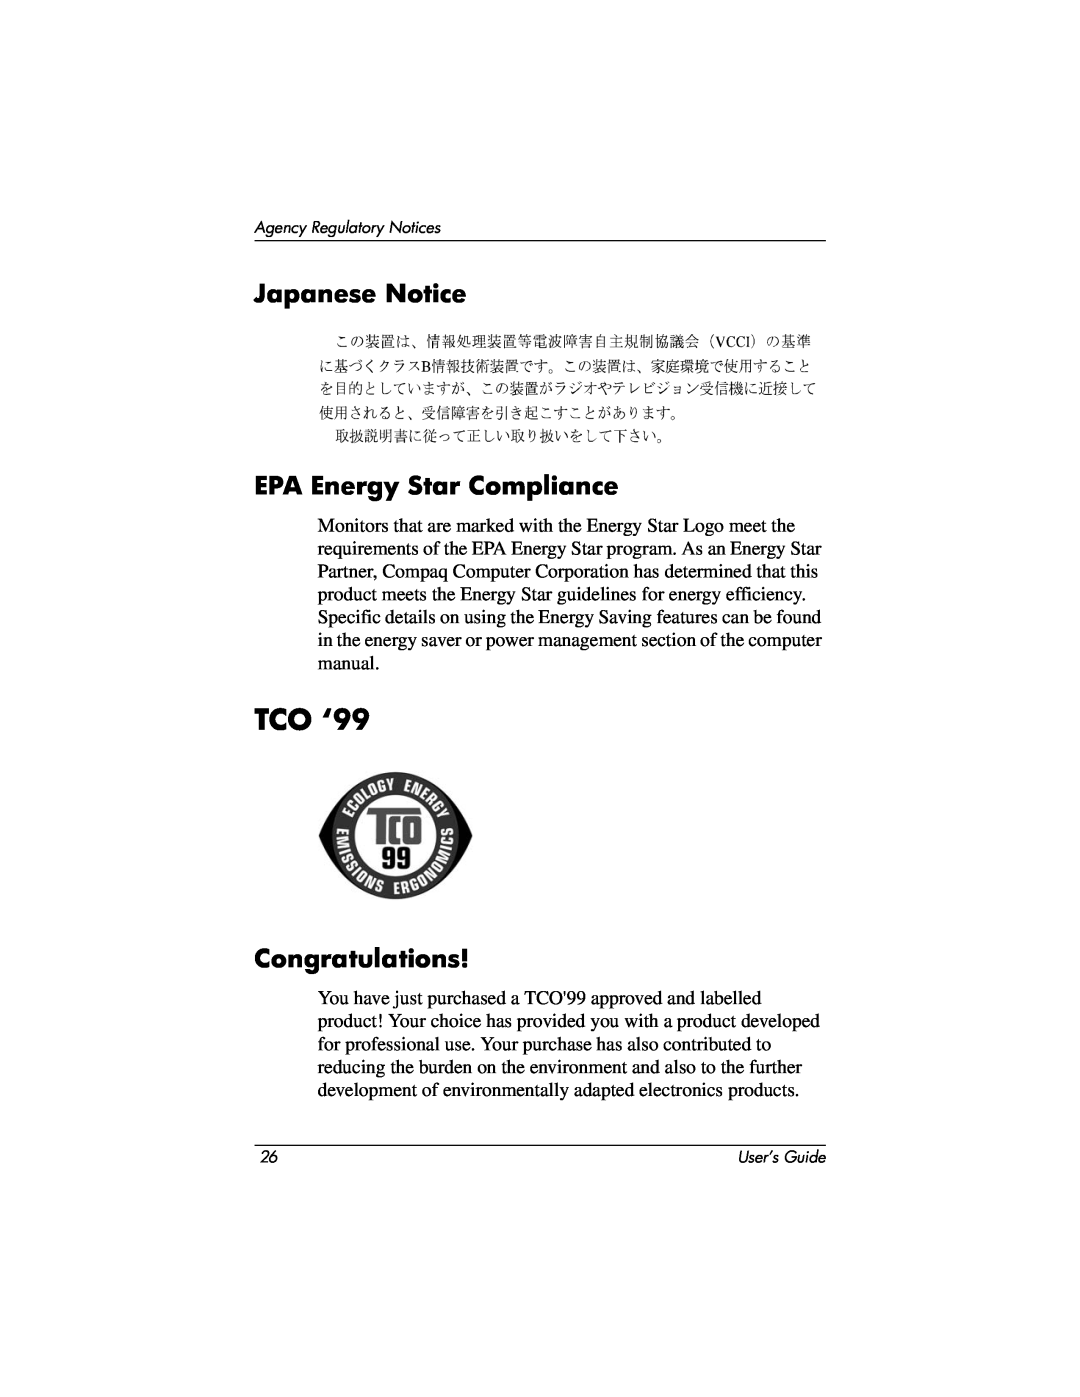 Compaq 2025 manual TCO ‘99, Japanese Notice EPA Energy Star Compliance, Congratulations 